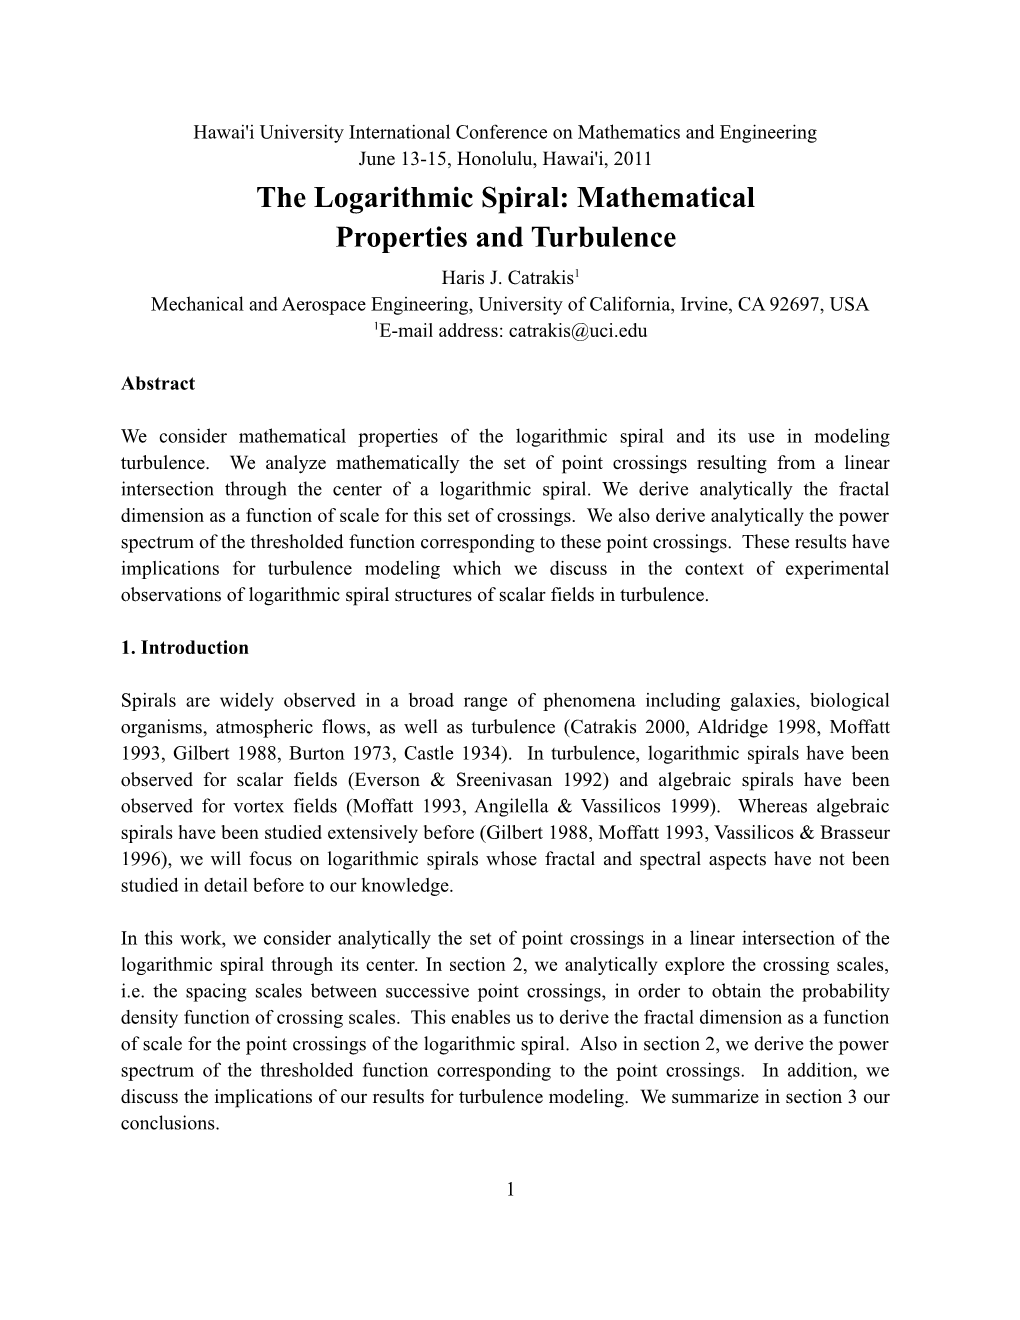 The Logarithmic Spiral: Mathematical Properties and Turbulence Haris J